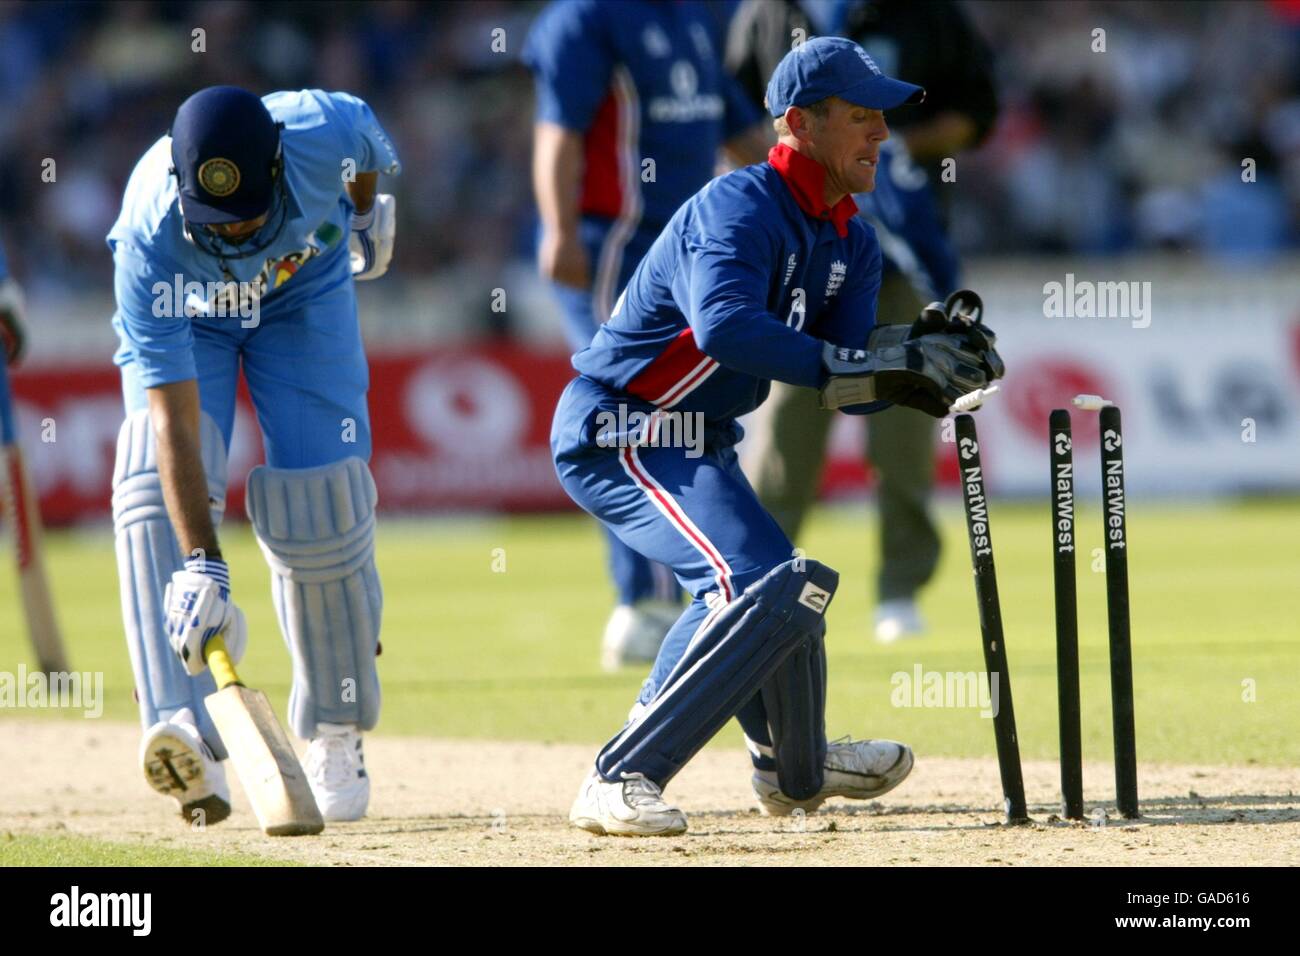 Cricket - série NatWest - Angleterre / Inde.Alec Stewart, en Angleterre, prend le pas Banque D'Images